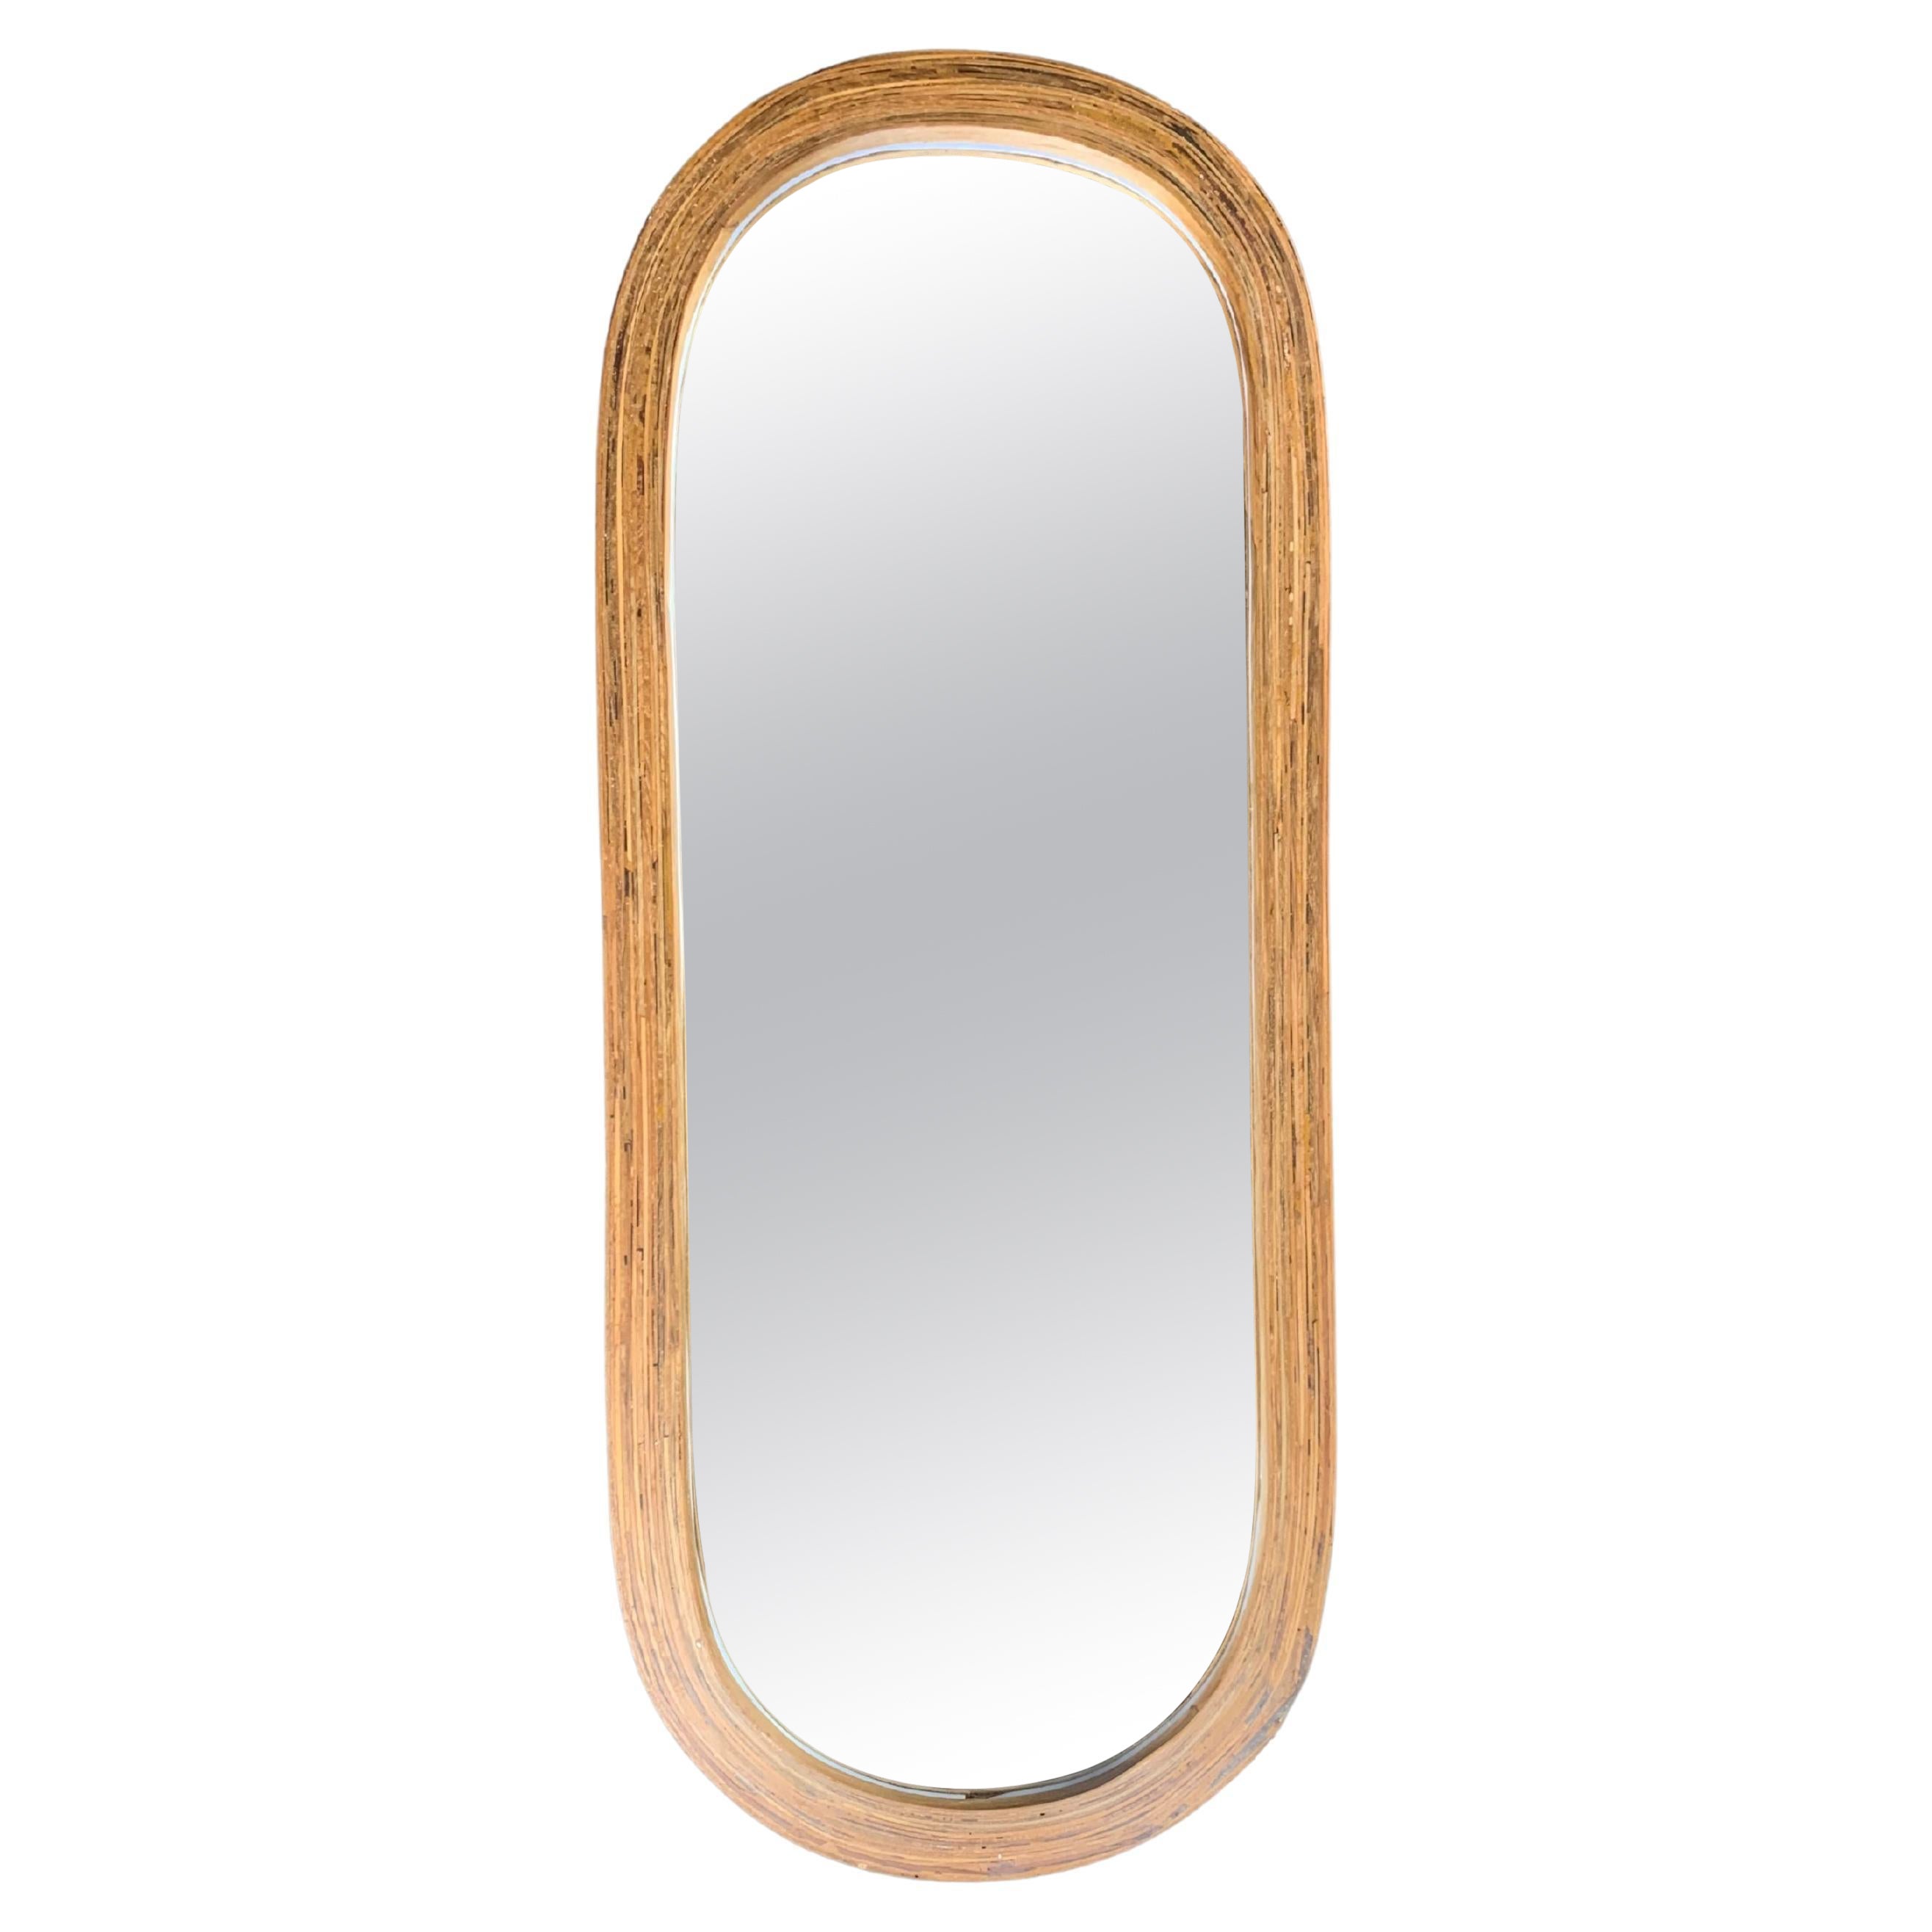 Reclaimed Teak Wood Framed Oval Mirror, Modern Organic, with Lighted Frame For Sale